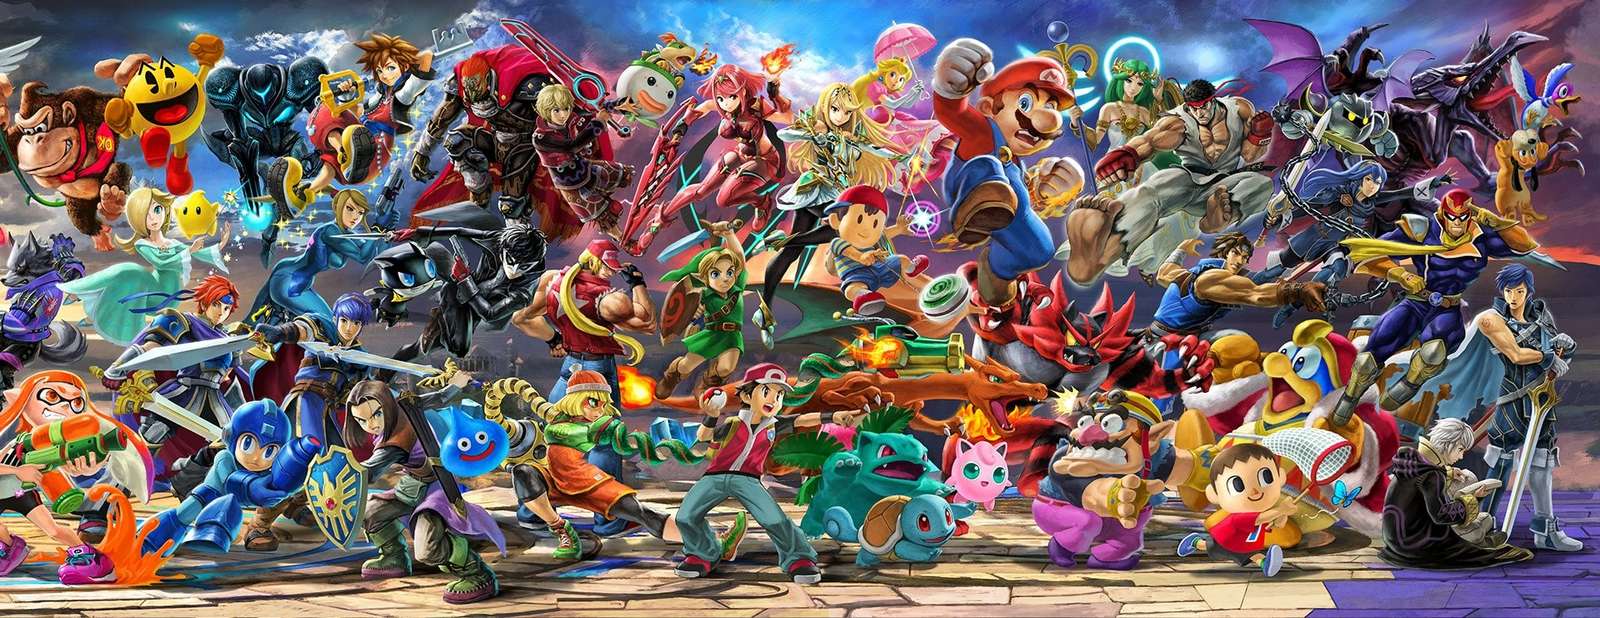 Super Smash Bros Ultimate-muurschildering, rechts legpuzzel online